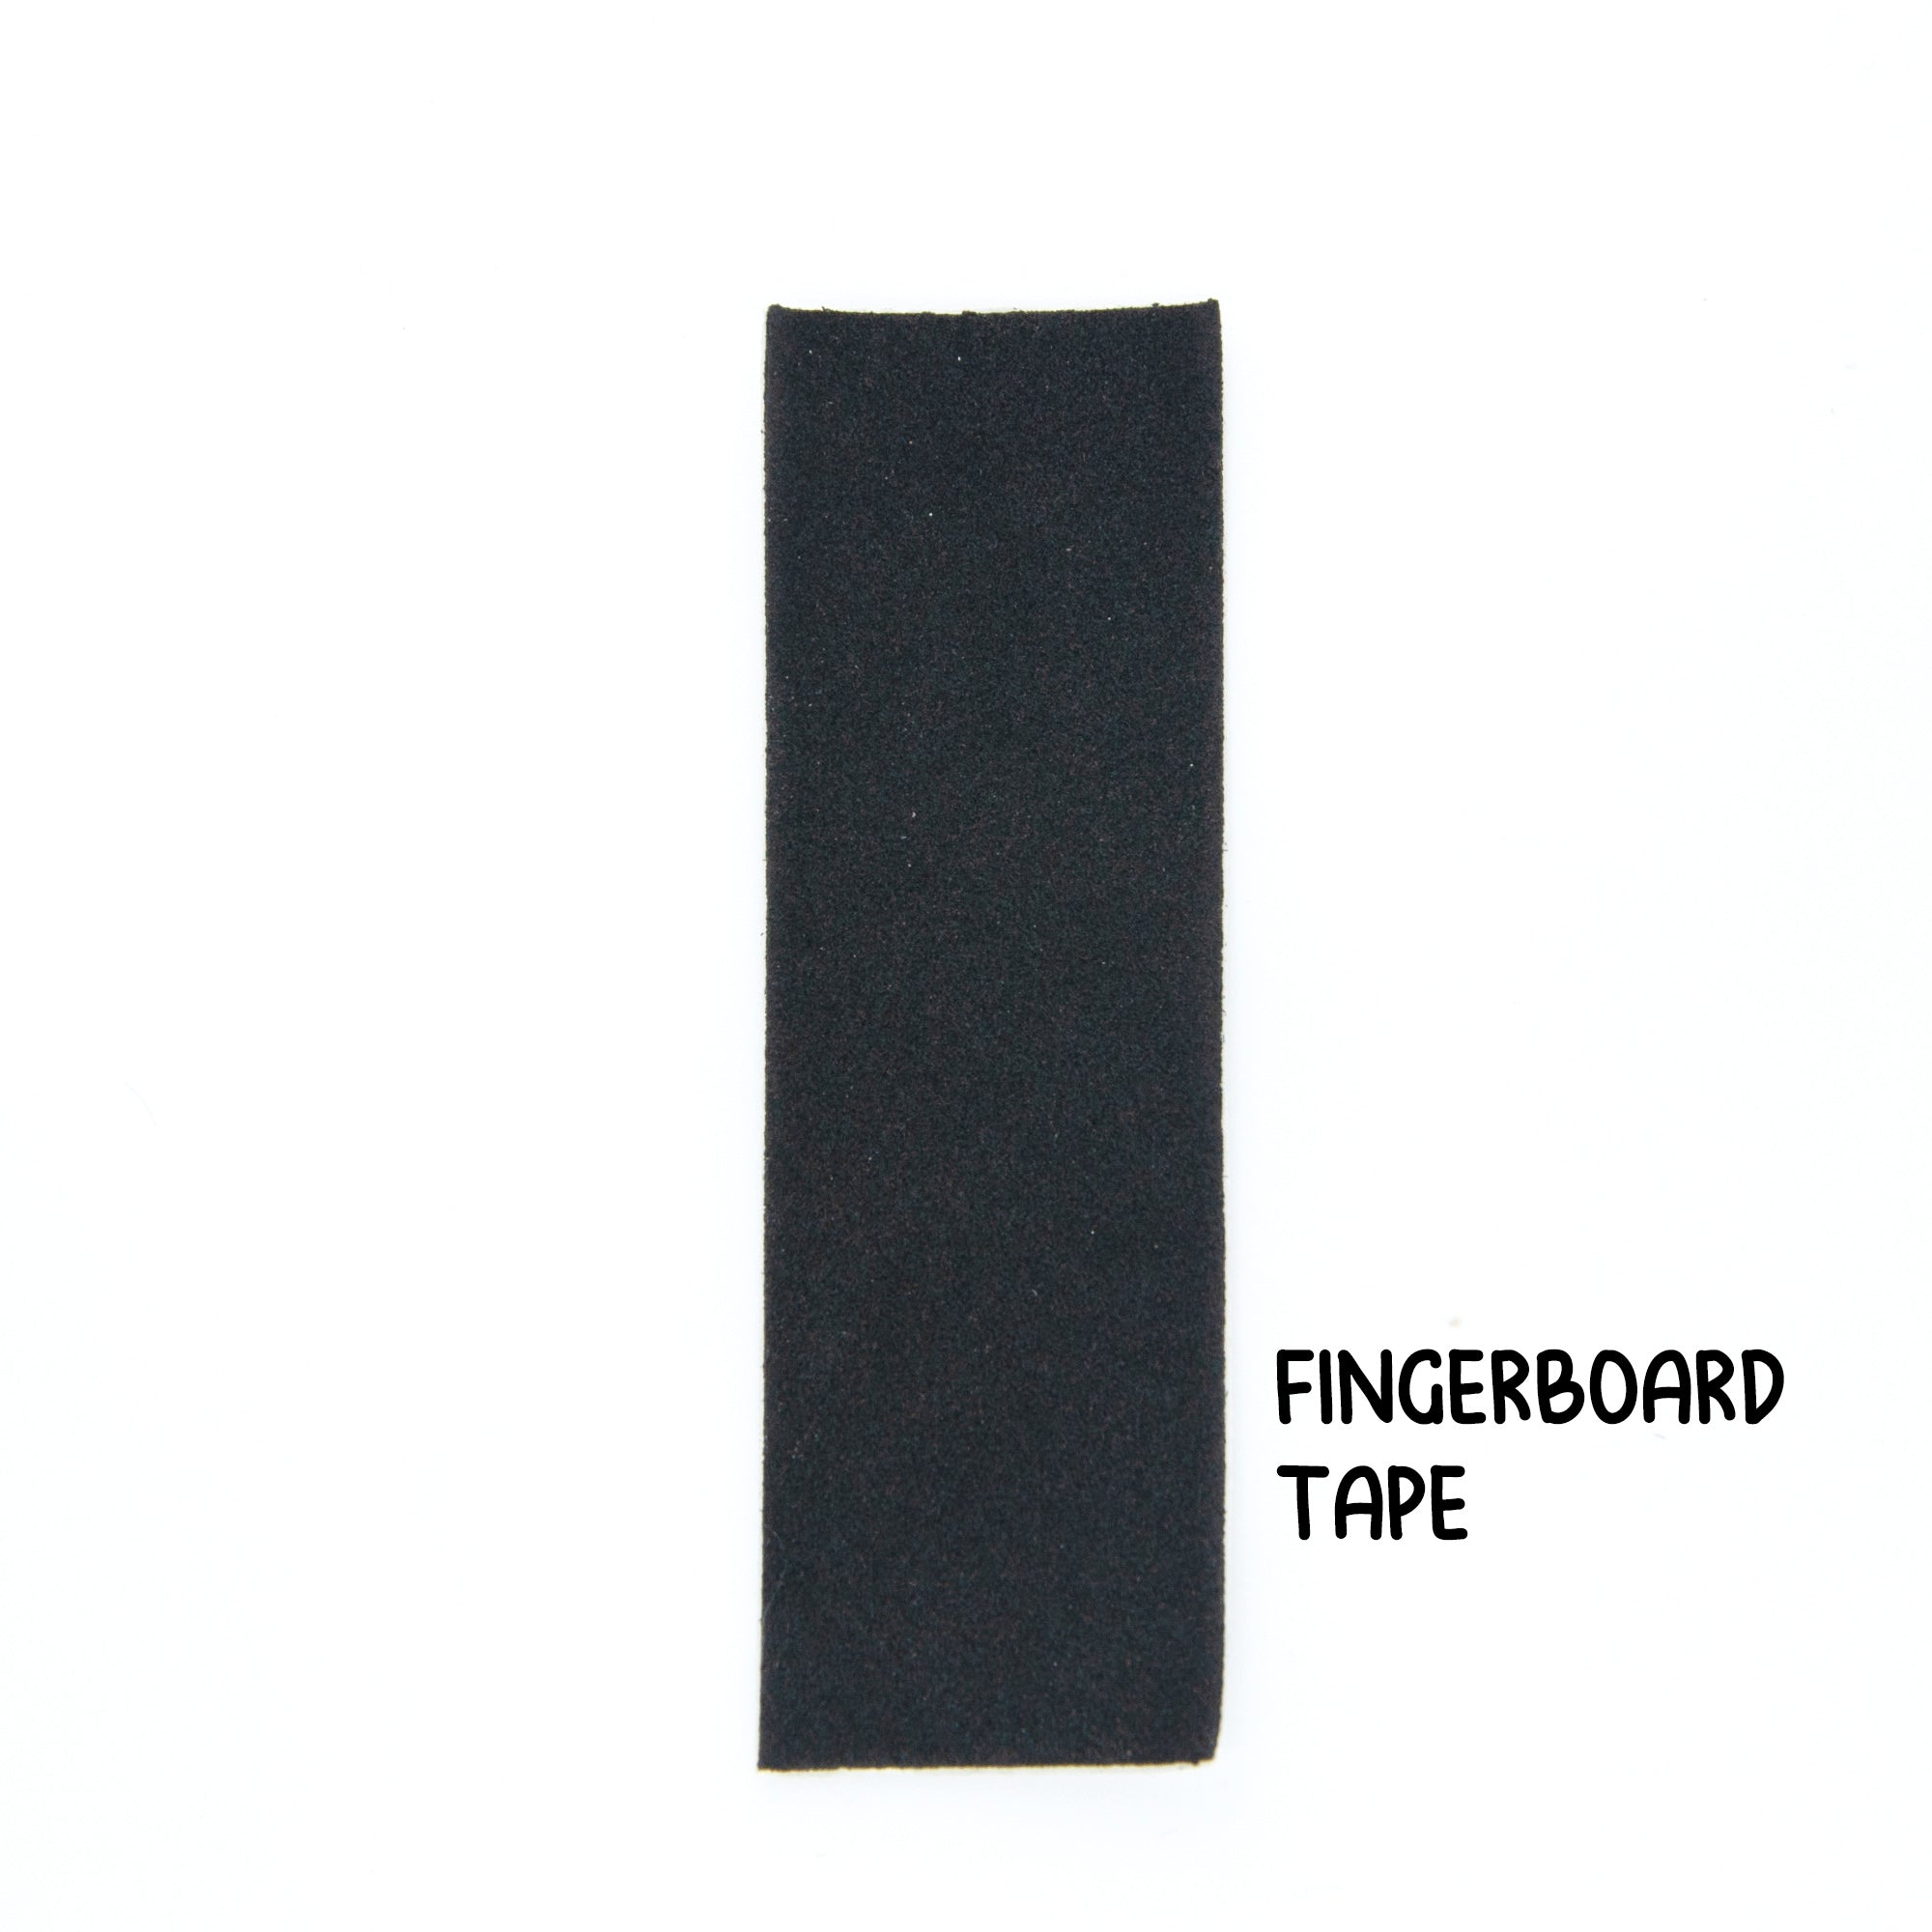 Real Wear Graphic Professional Fingerboard Deck -Fingerboard Tape